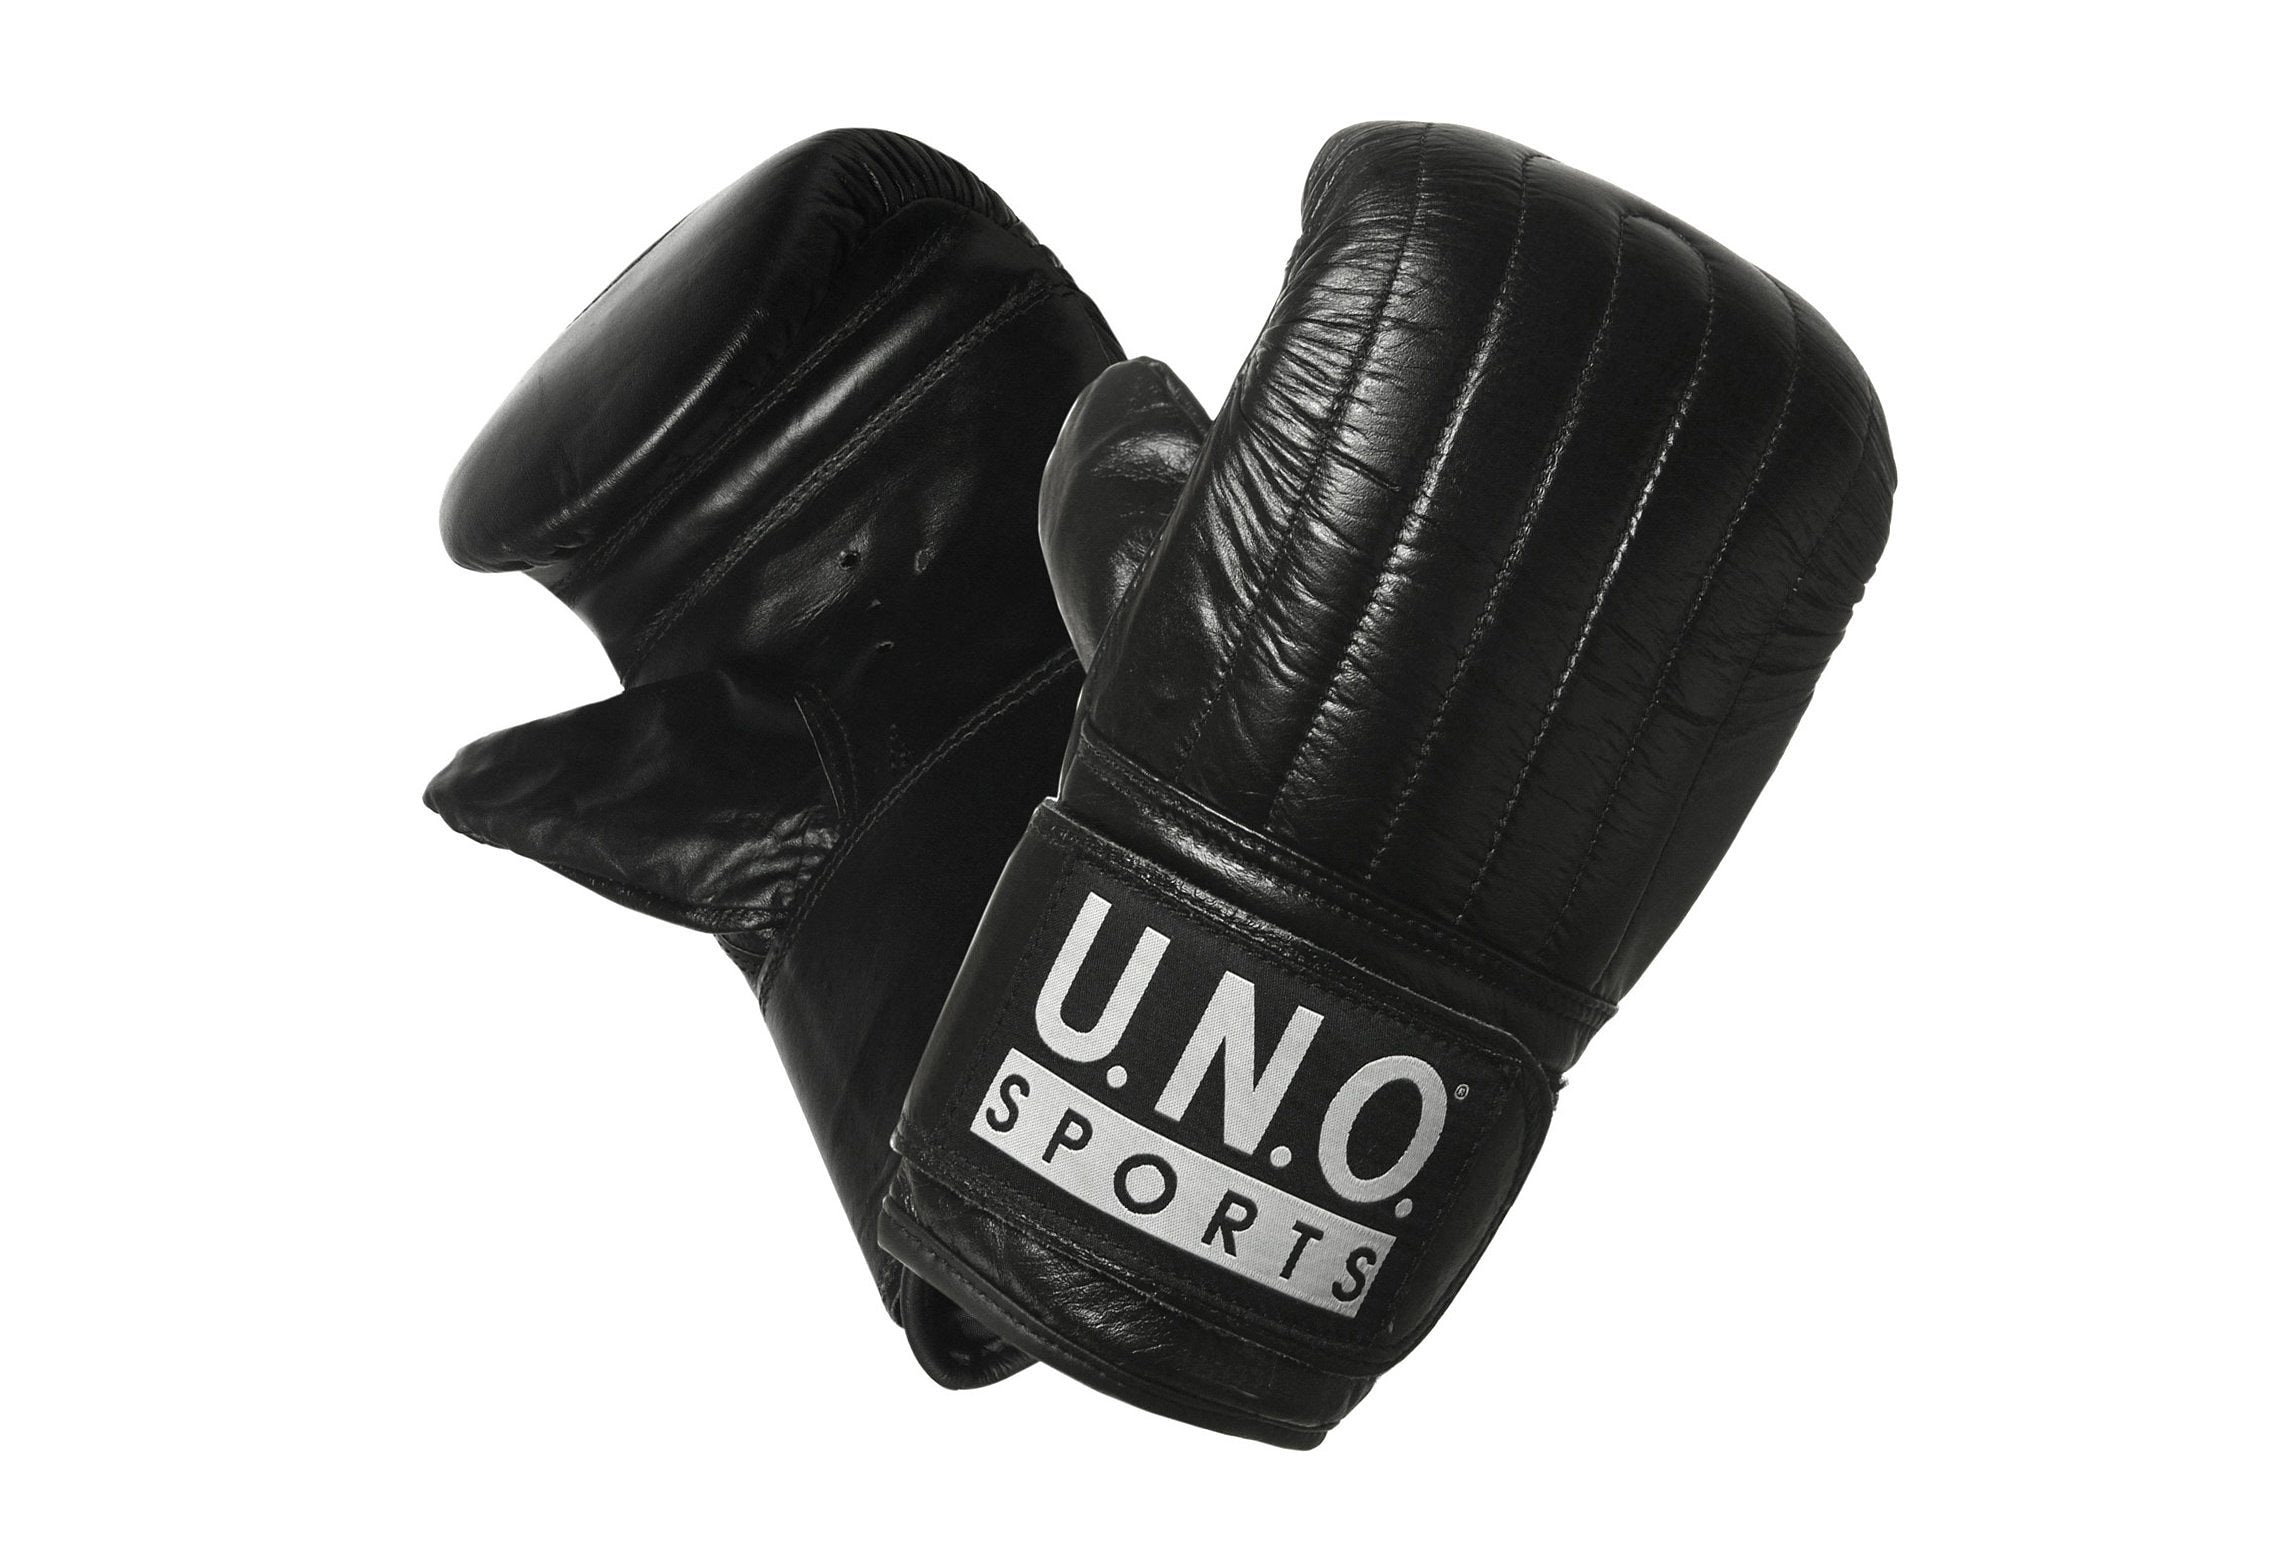 tlg.) »Punch«, online SPORTS U.N.O. kaufen (2 Boxhandschuhe